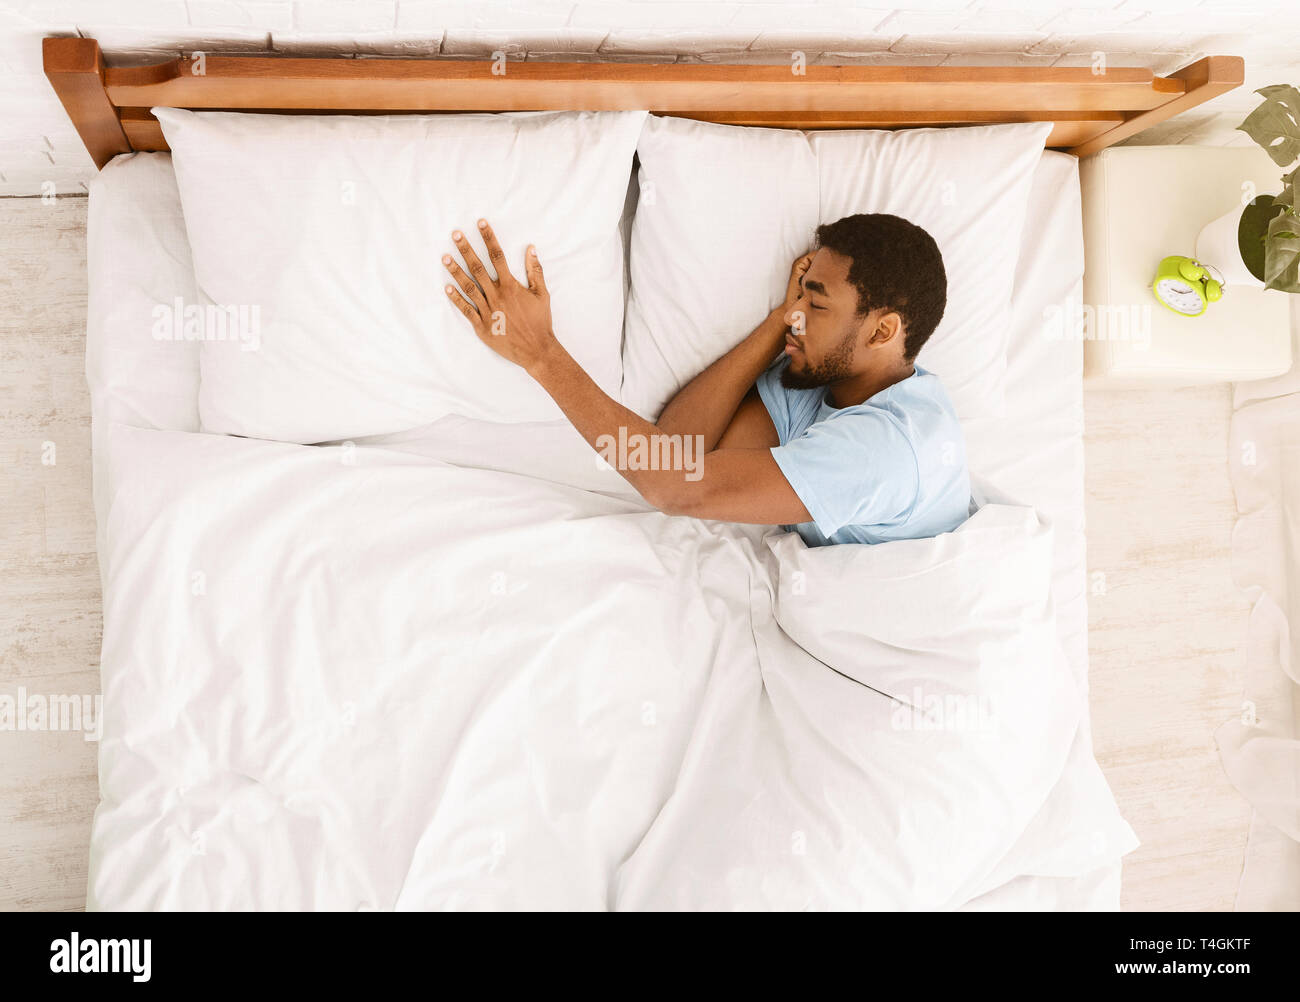 Hombre en cama doble solo fotografías e imágenes de alta resolución - Alamy